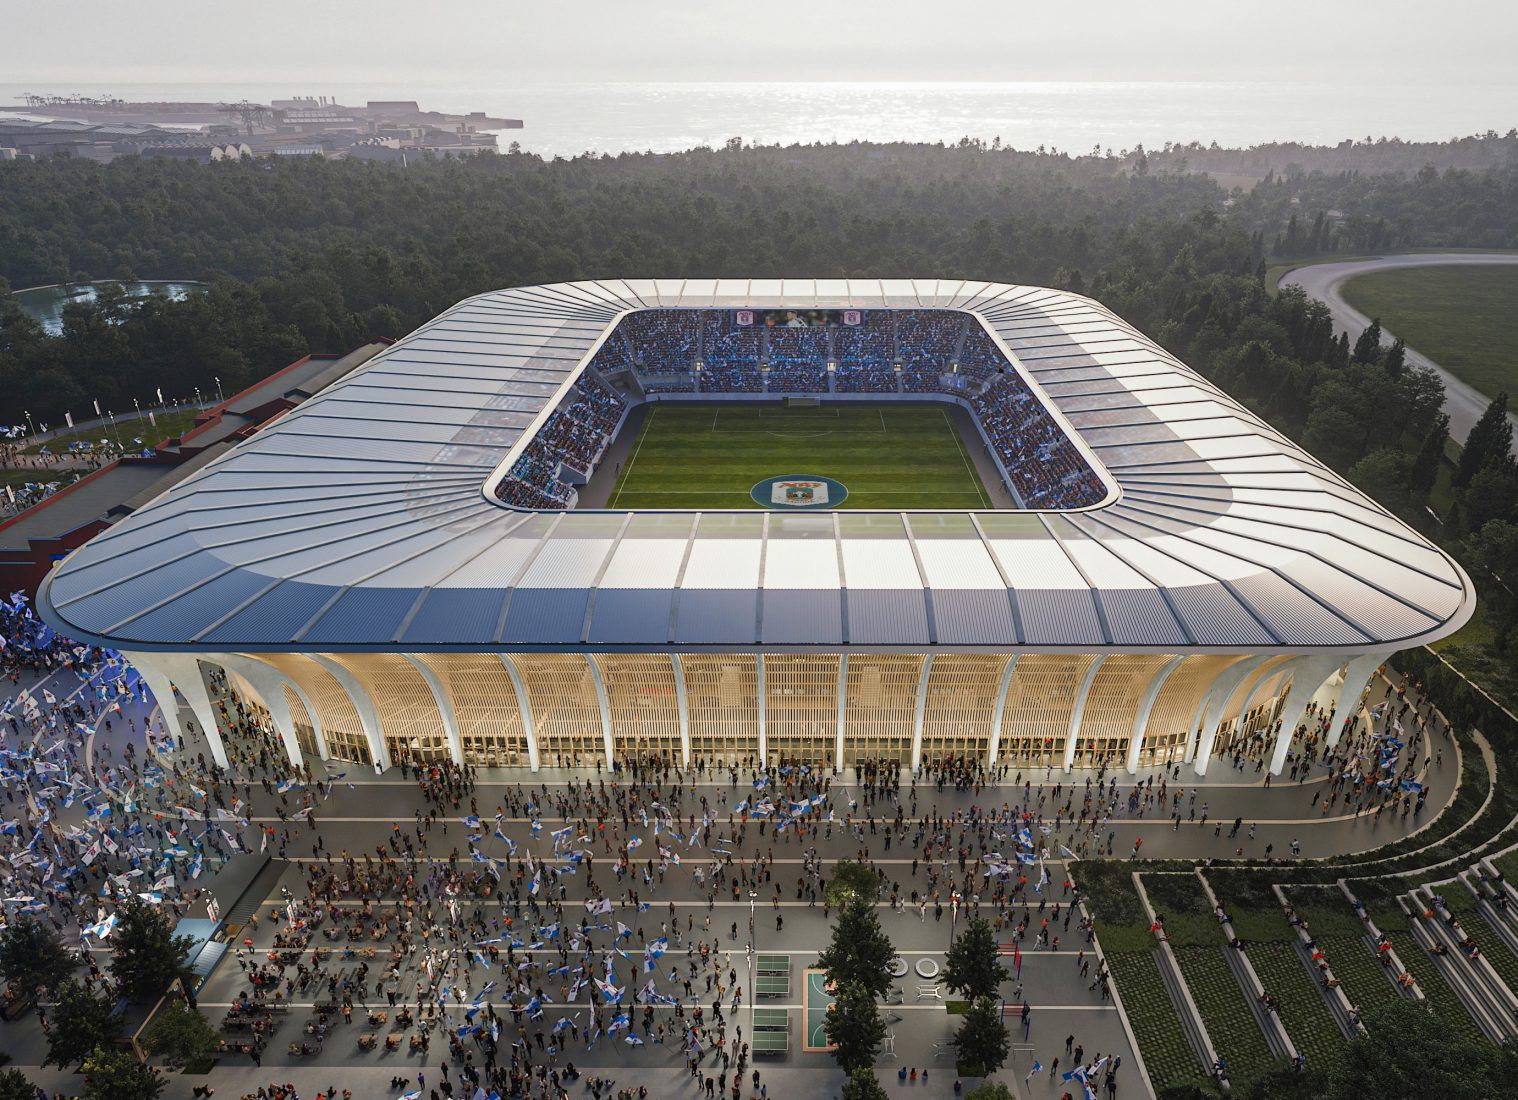 Large stadium plans on the way in Aarhus